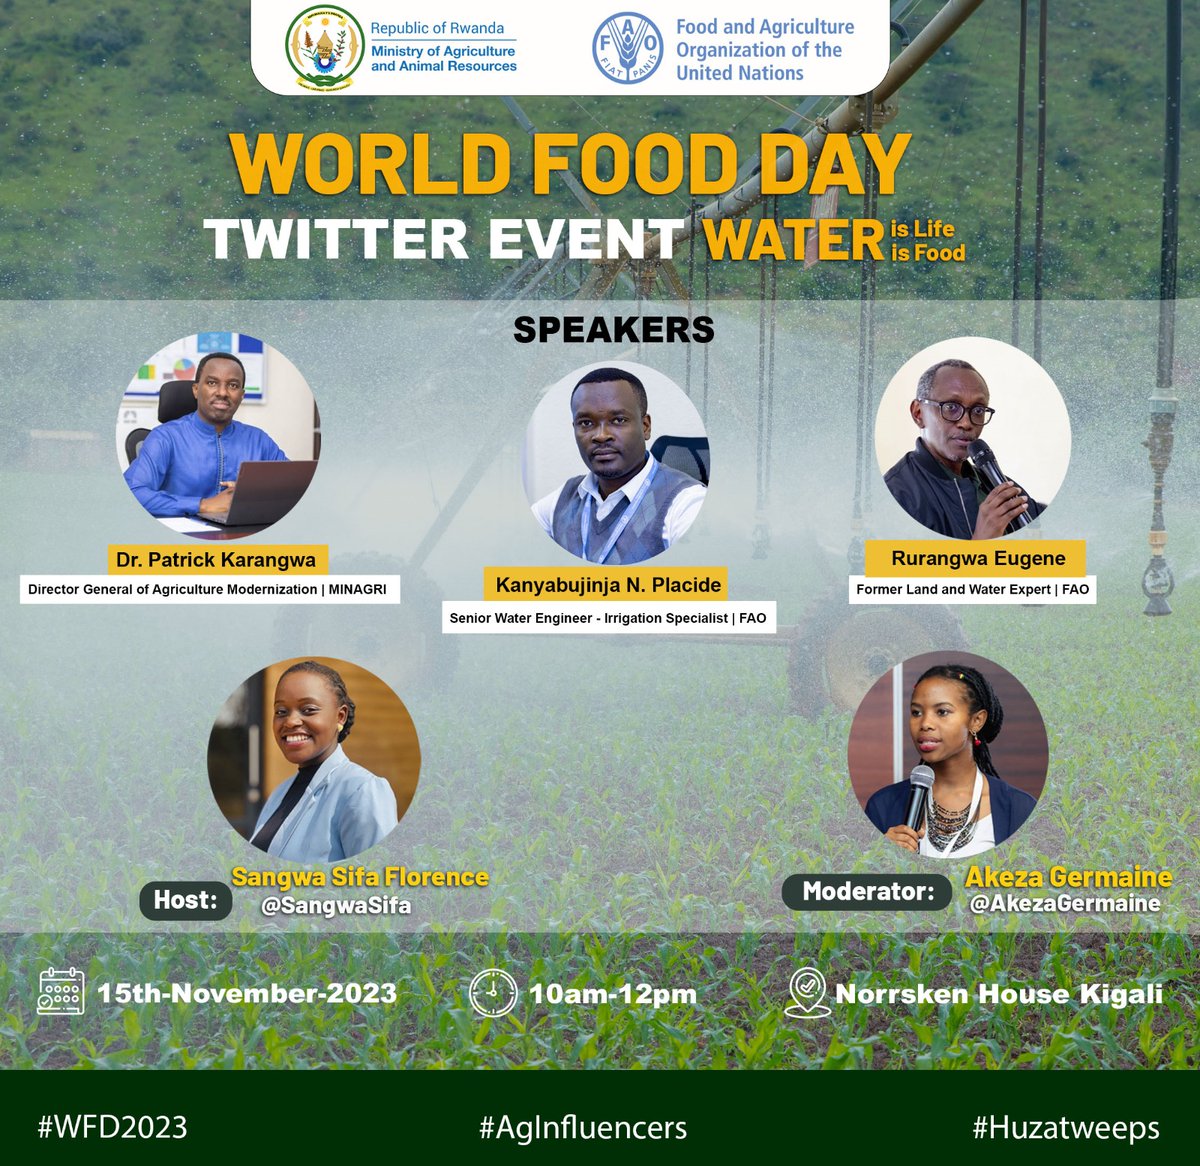 Water is Life💧
Water is Food💧
Leave no one behind.

On 15/11, let's continue the #worldfoodday conversation @norrskenEA House #Kigali

#Huzatweeps hosted by @SangwaSifa & @AkezaGermaine with:

- DG @P_Karangwa of @RwandaAgri
- Eng Eugene Rurangwa @erburabyo
- Eng @nshutiplacide